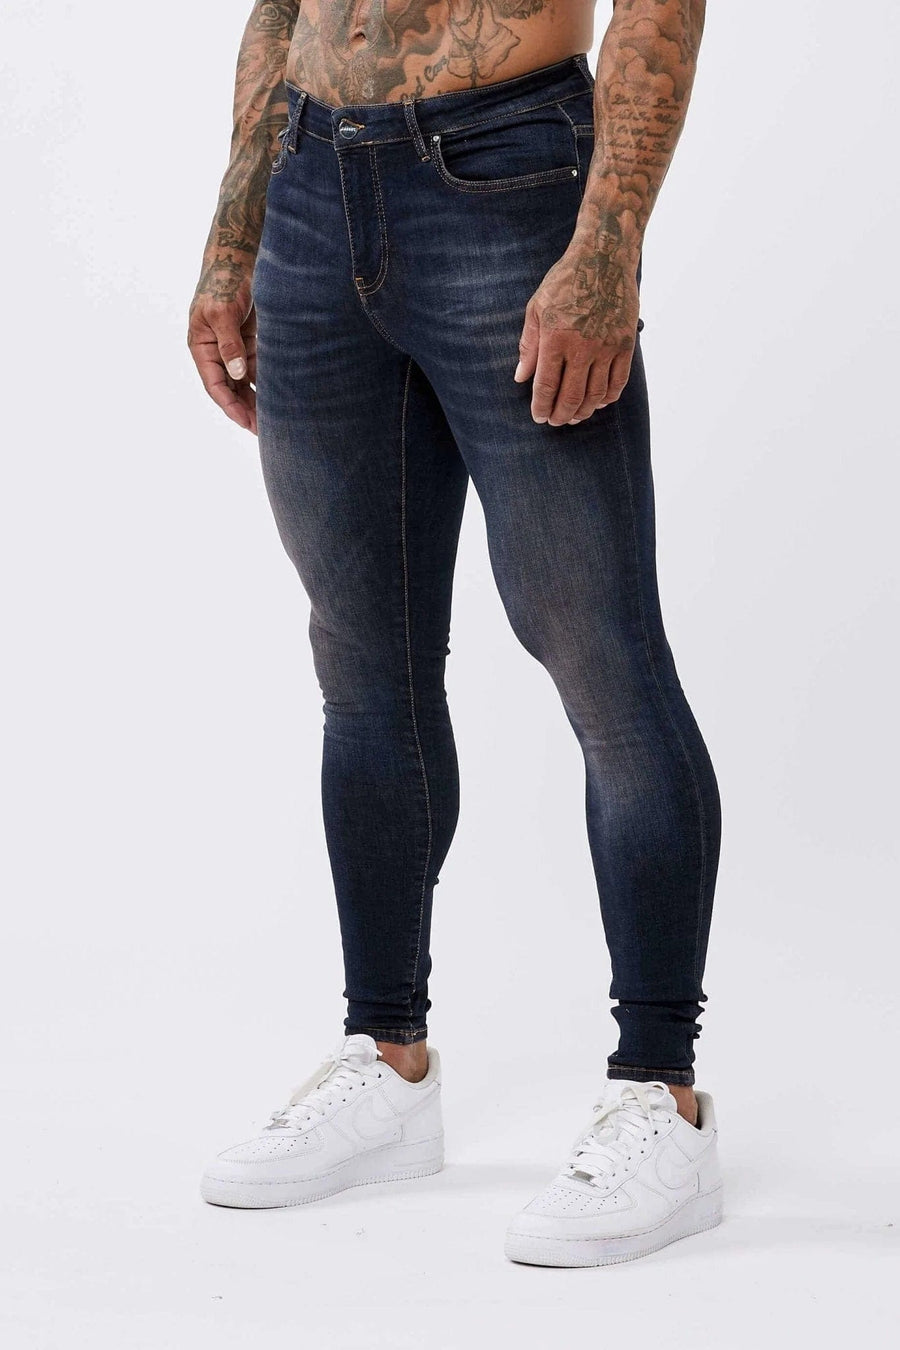 Legend London Jeans CLASSIC INDIGO BLUE SPRAY ON JEANS